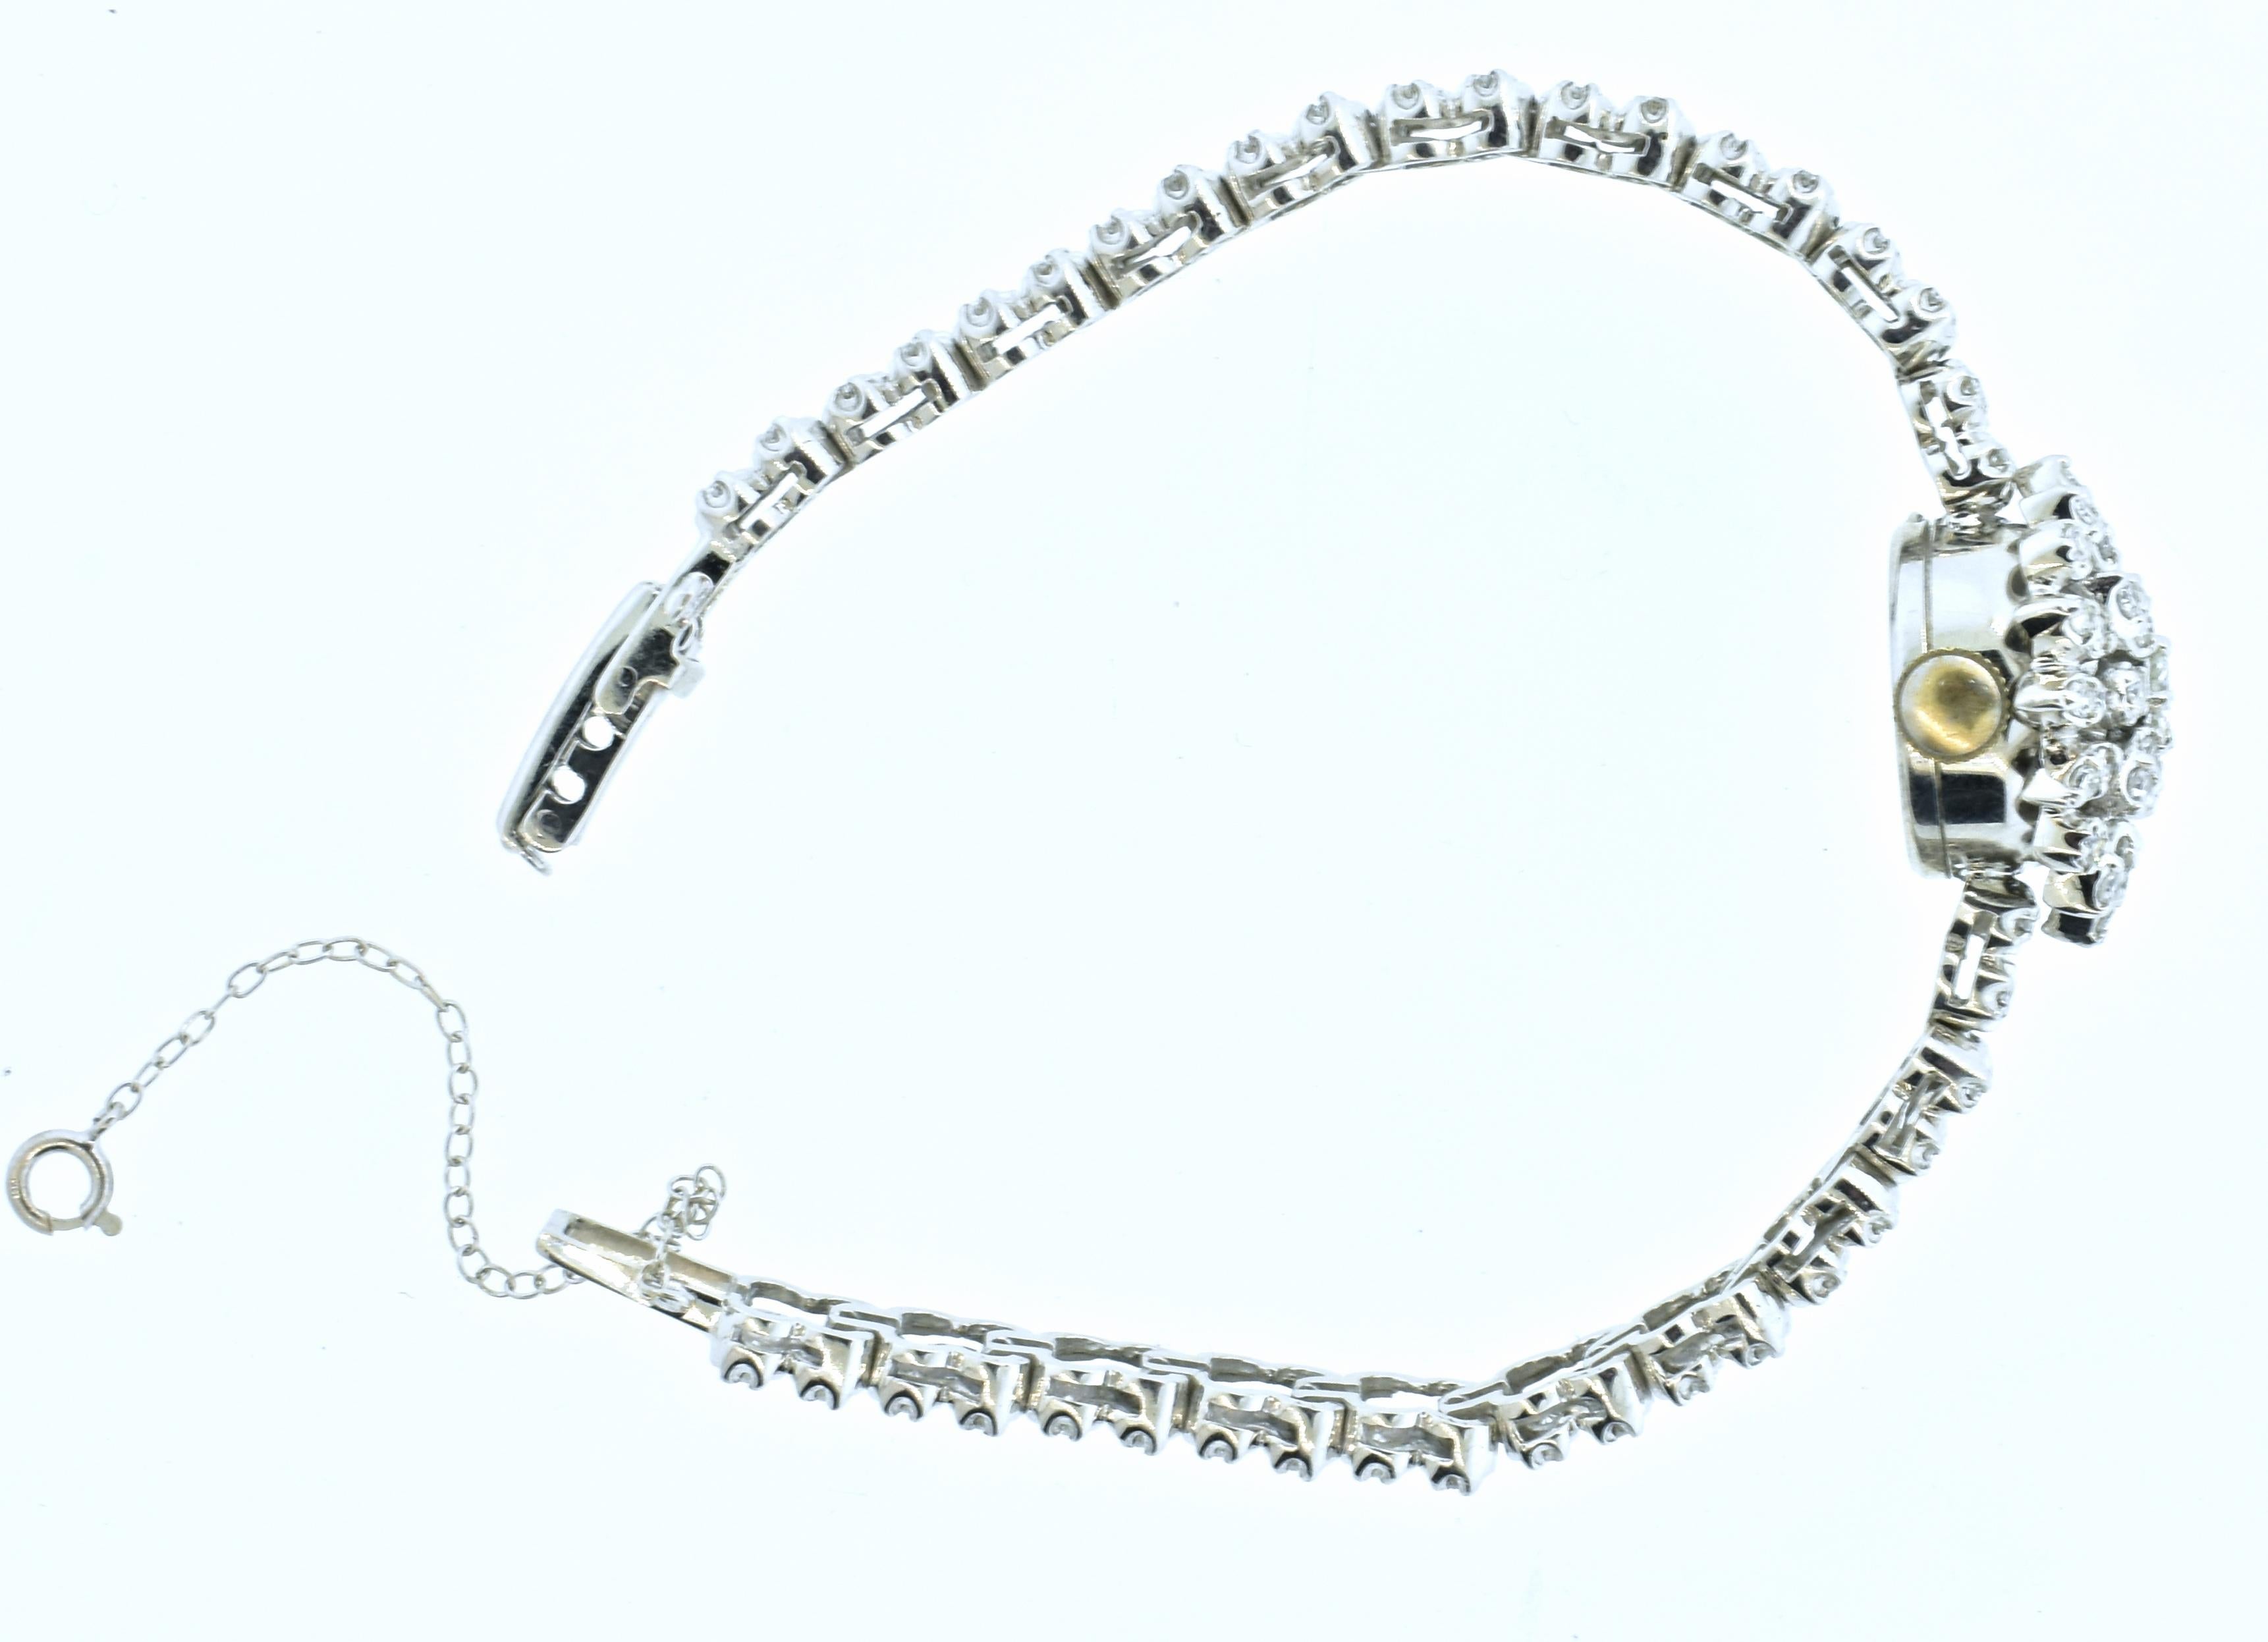 Brilliant Cut Diamond and White Gold Bracelet with Hidden Watch, Croton, circa 1960